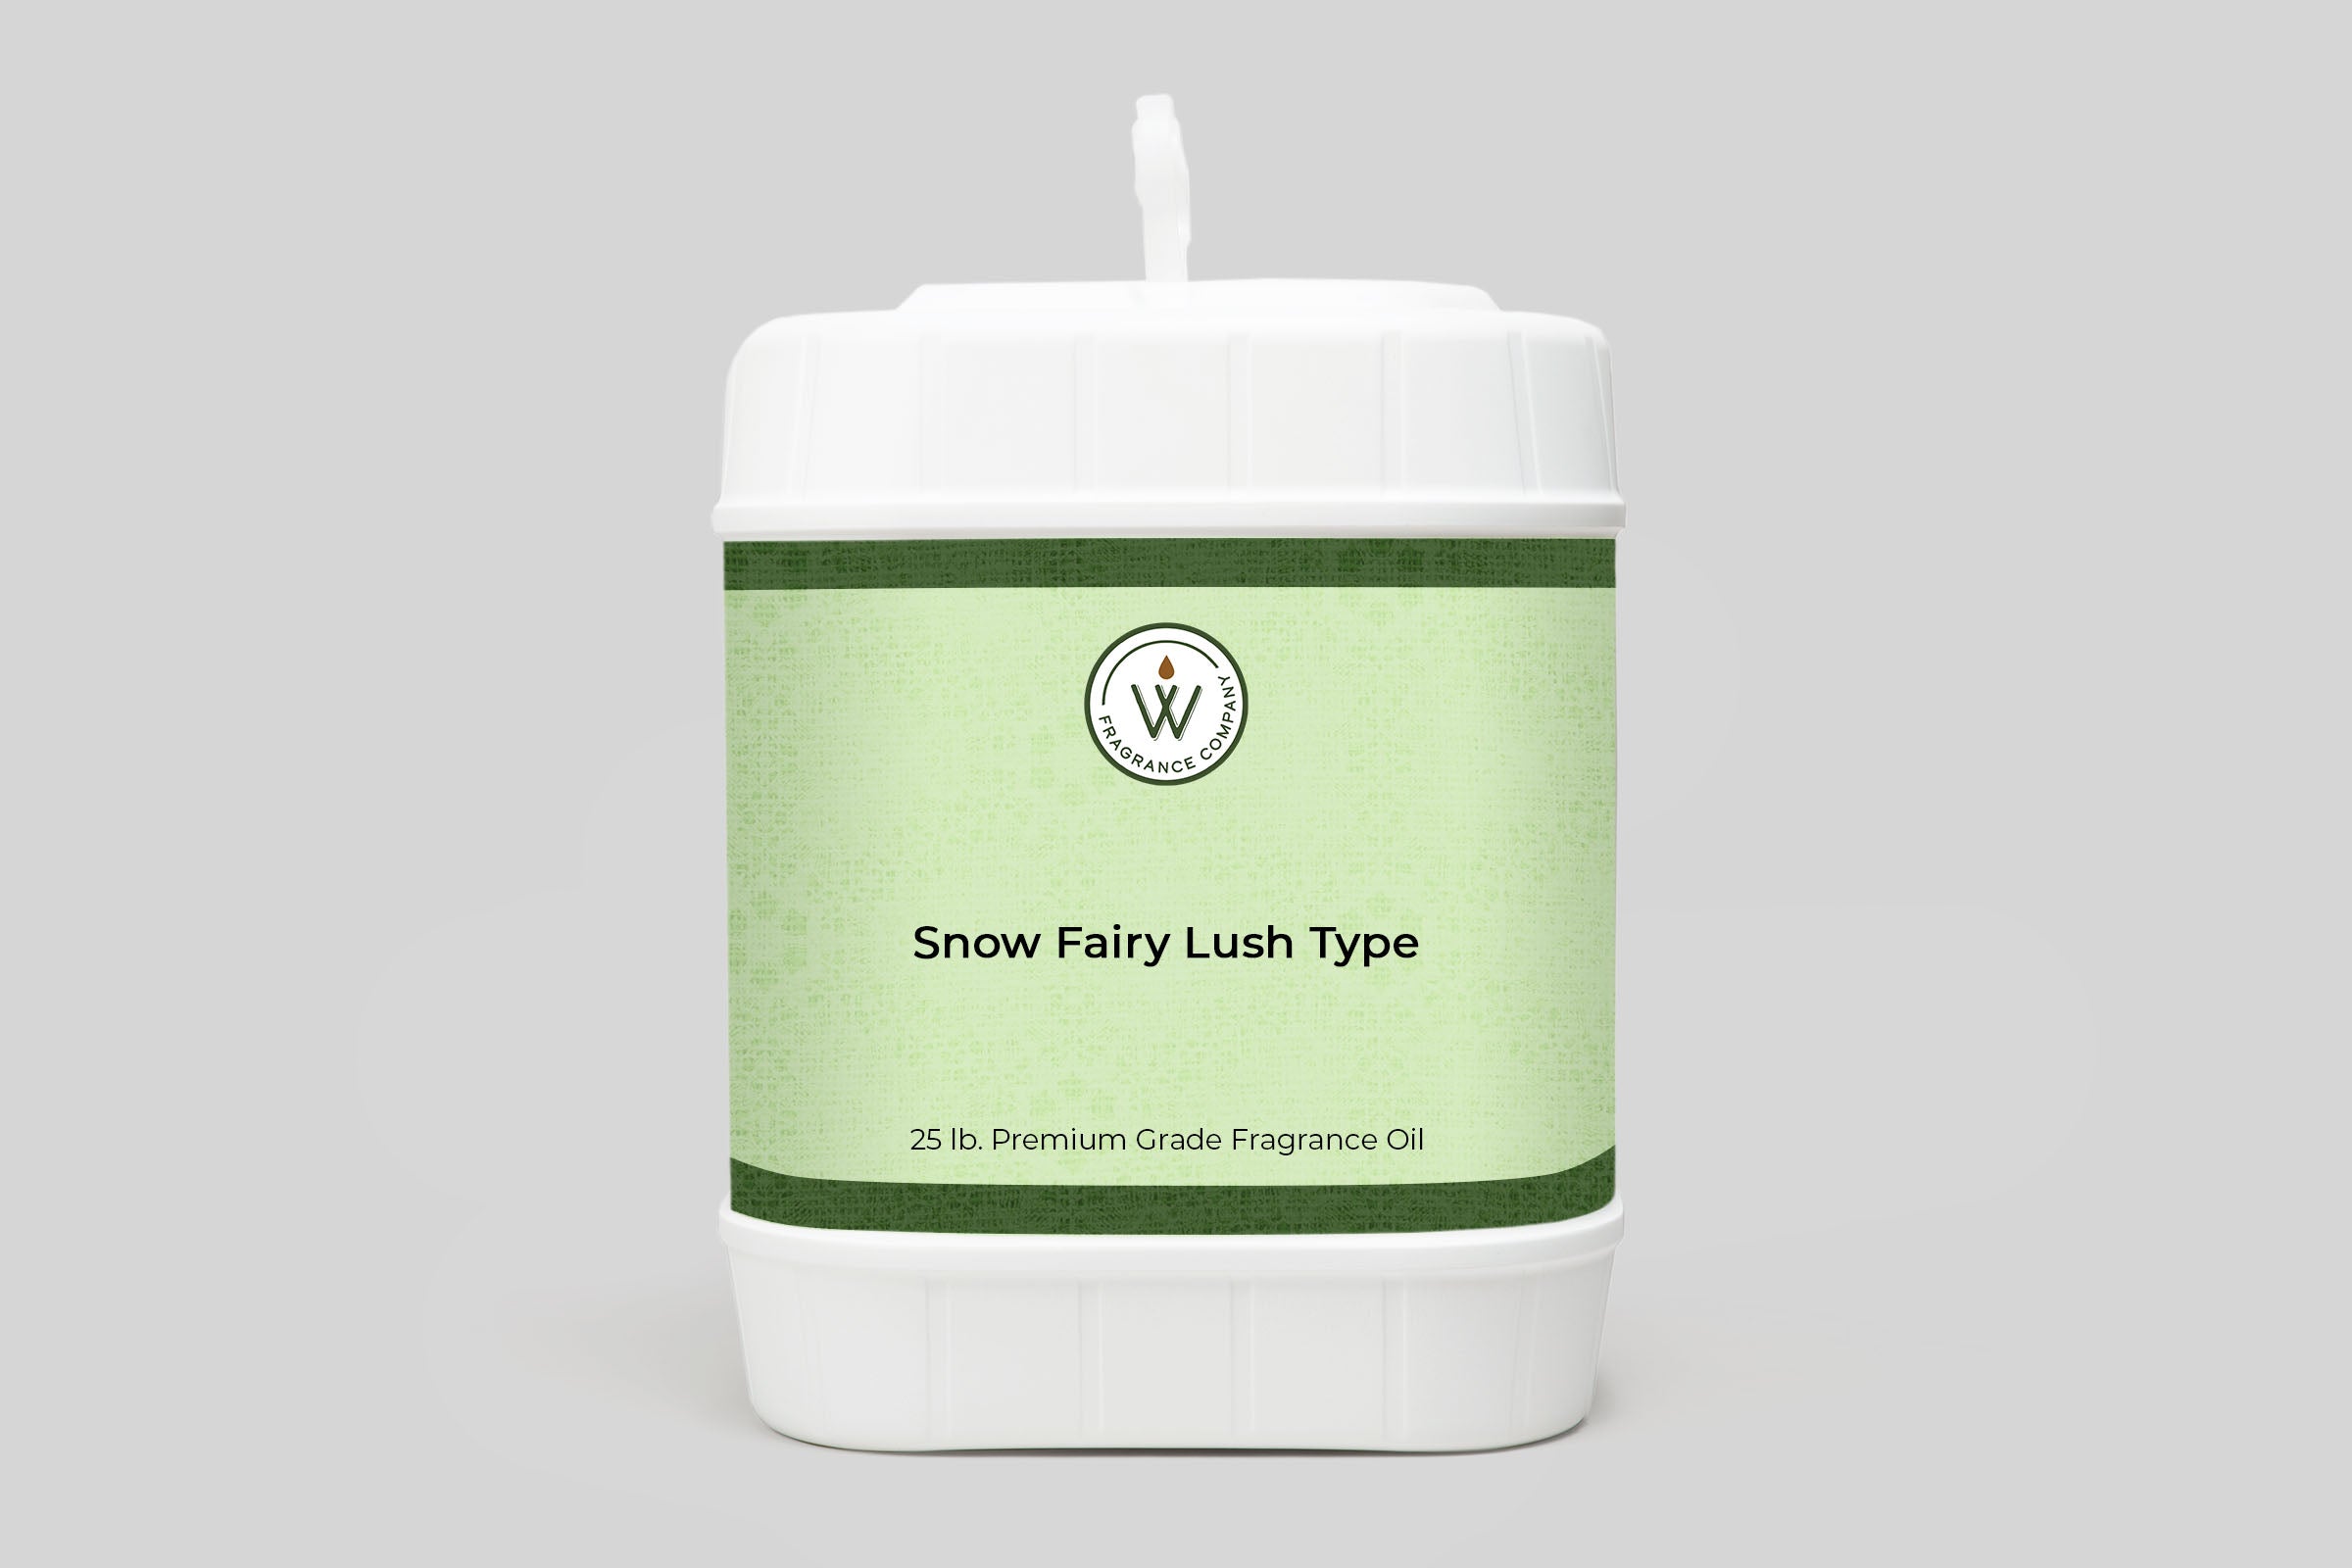 Snow Fairy Lush Type Fragrance Oil